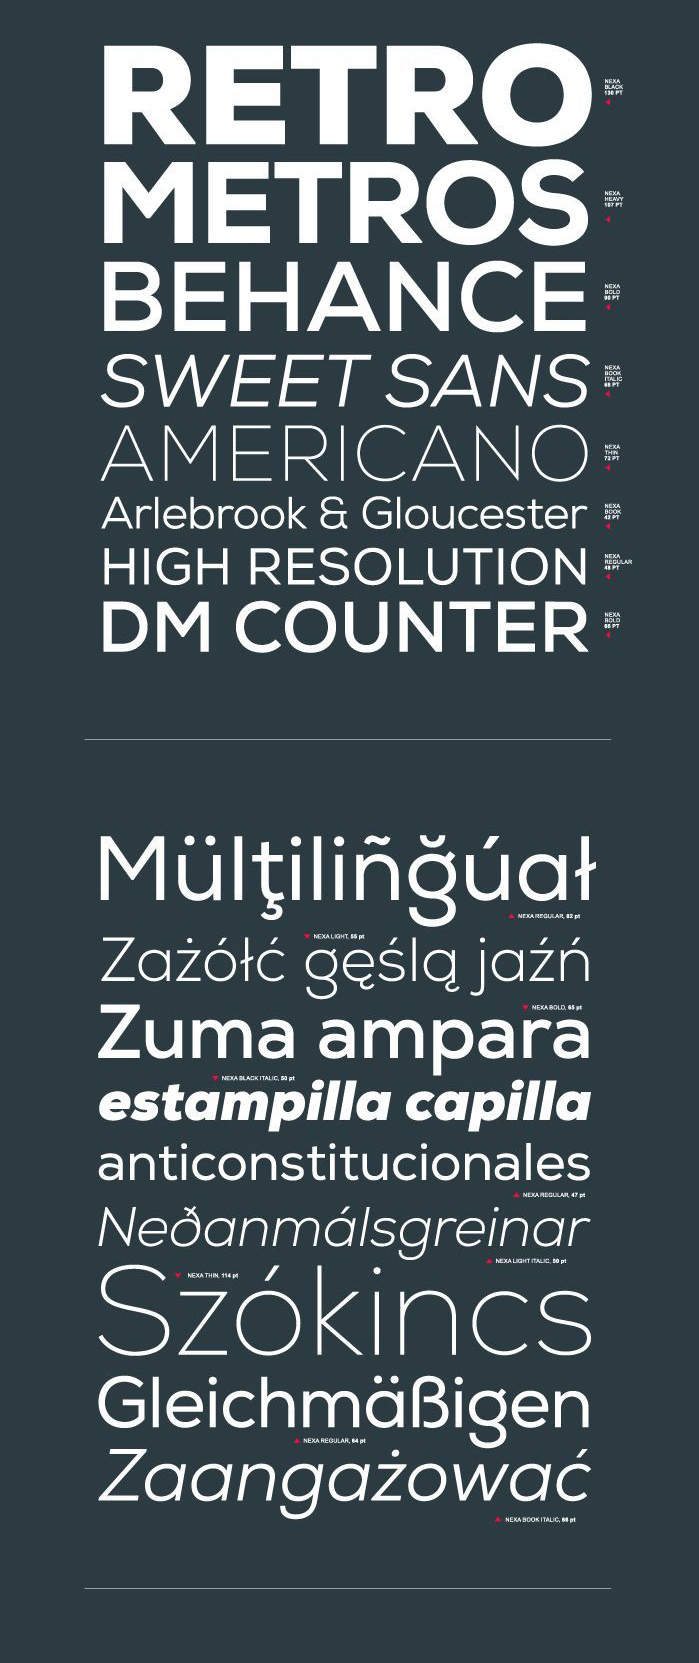 Nexa Font Free - sans-serif